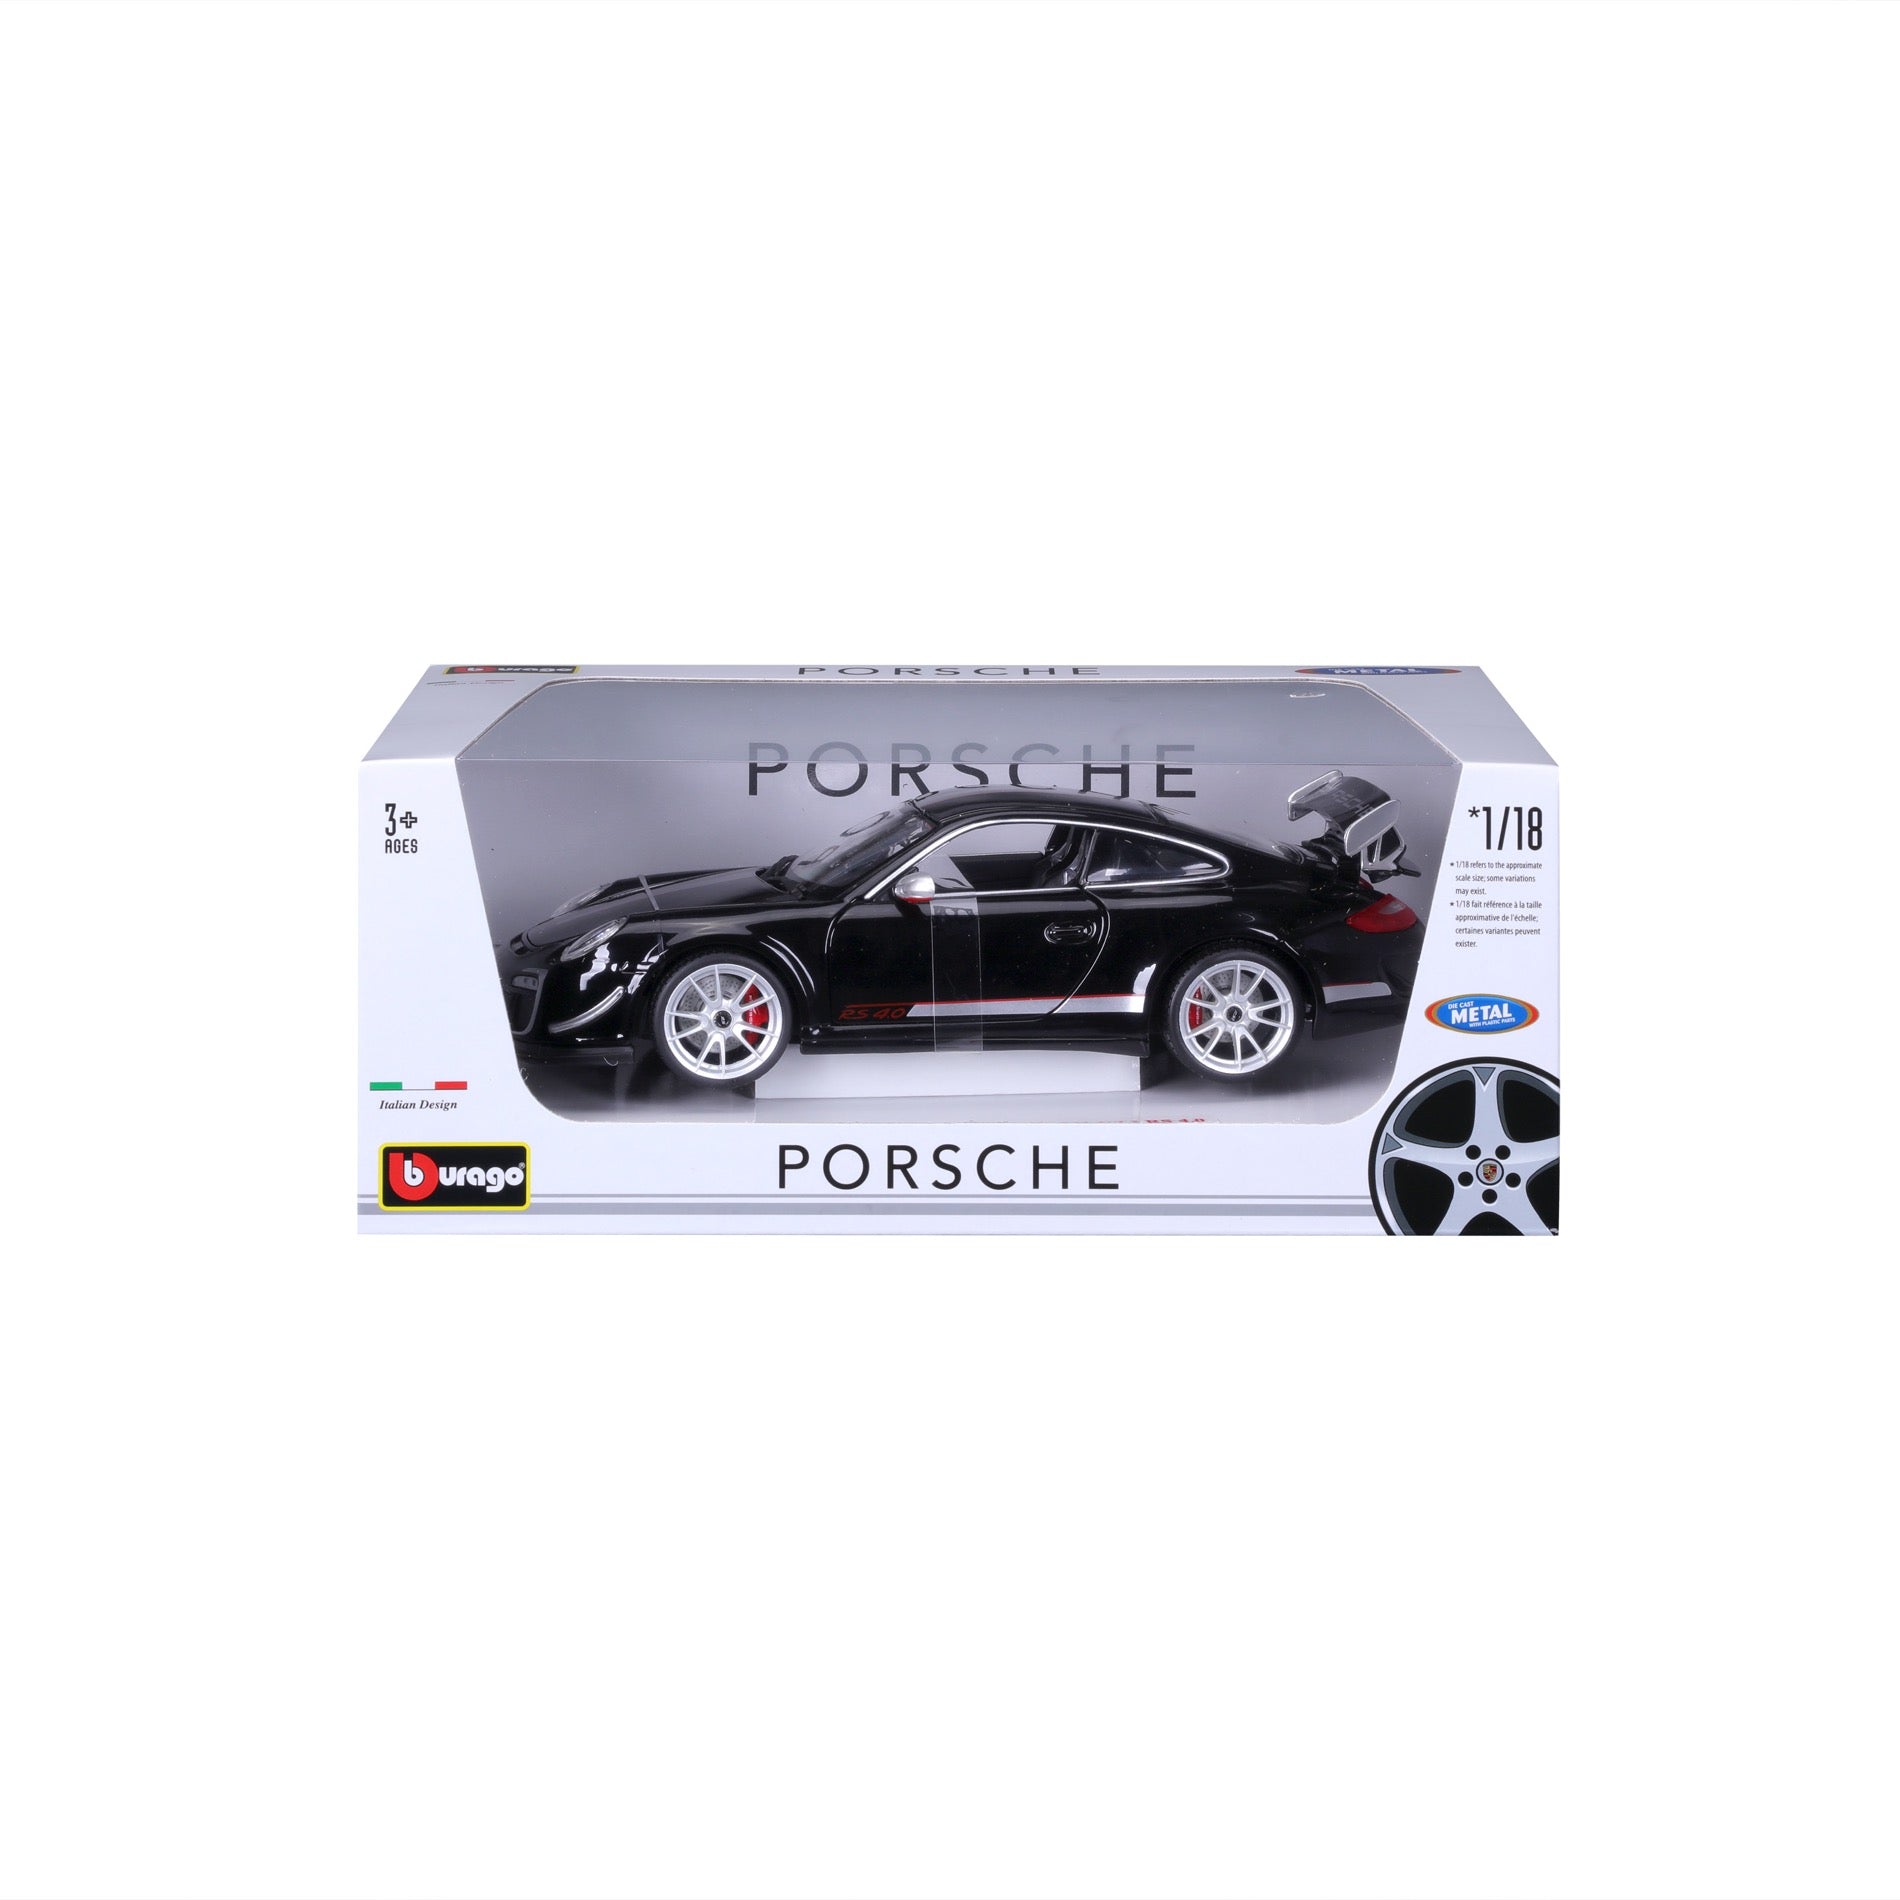 18-11036 BK - Bburago - 1:18 - Porsche GT3 RS 4.0  - Nera